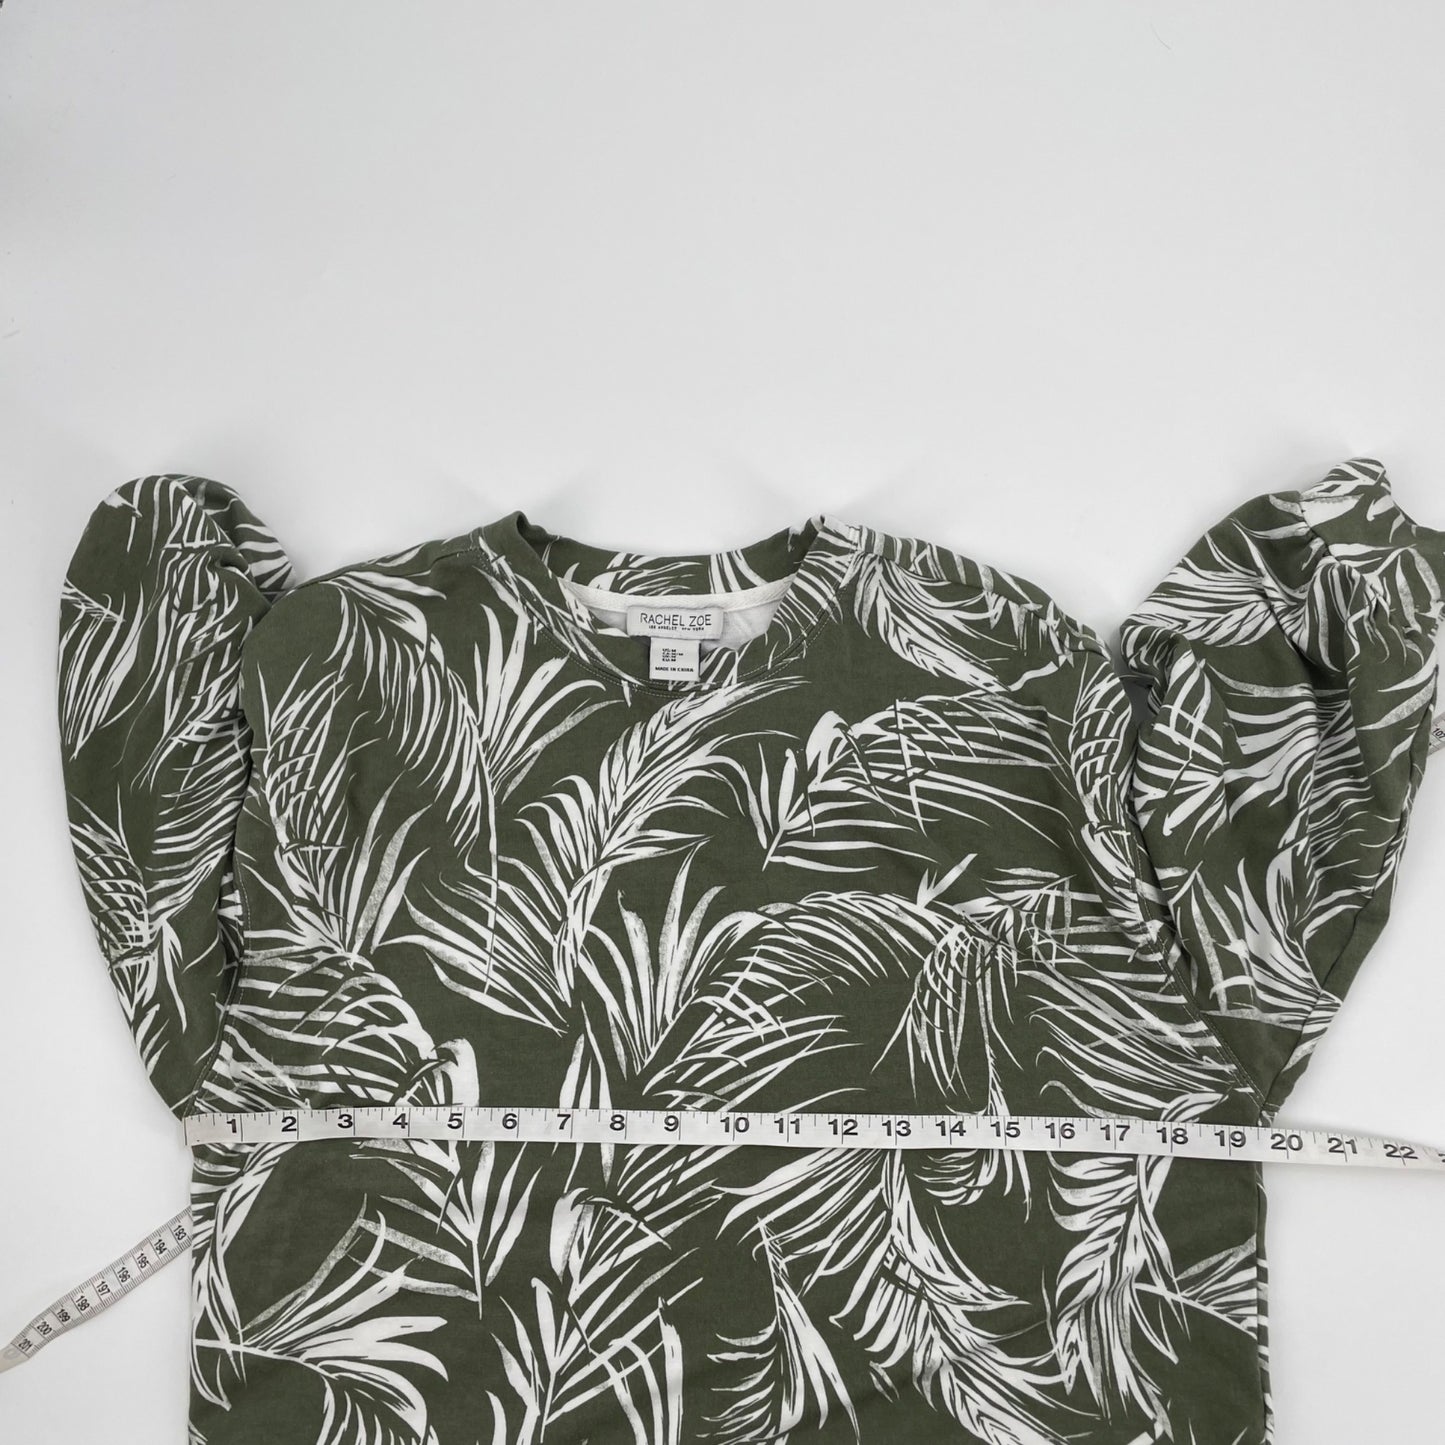 Rachel Zoe Green Palm Print Long Sleeve Shirt Womens Size Medium Casual Stretch